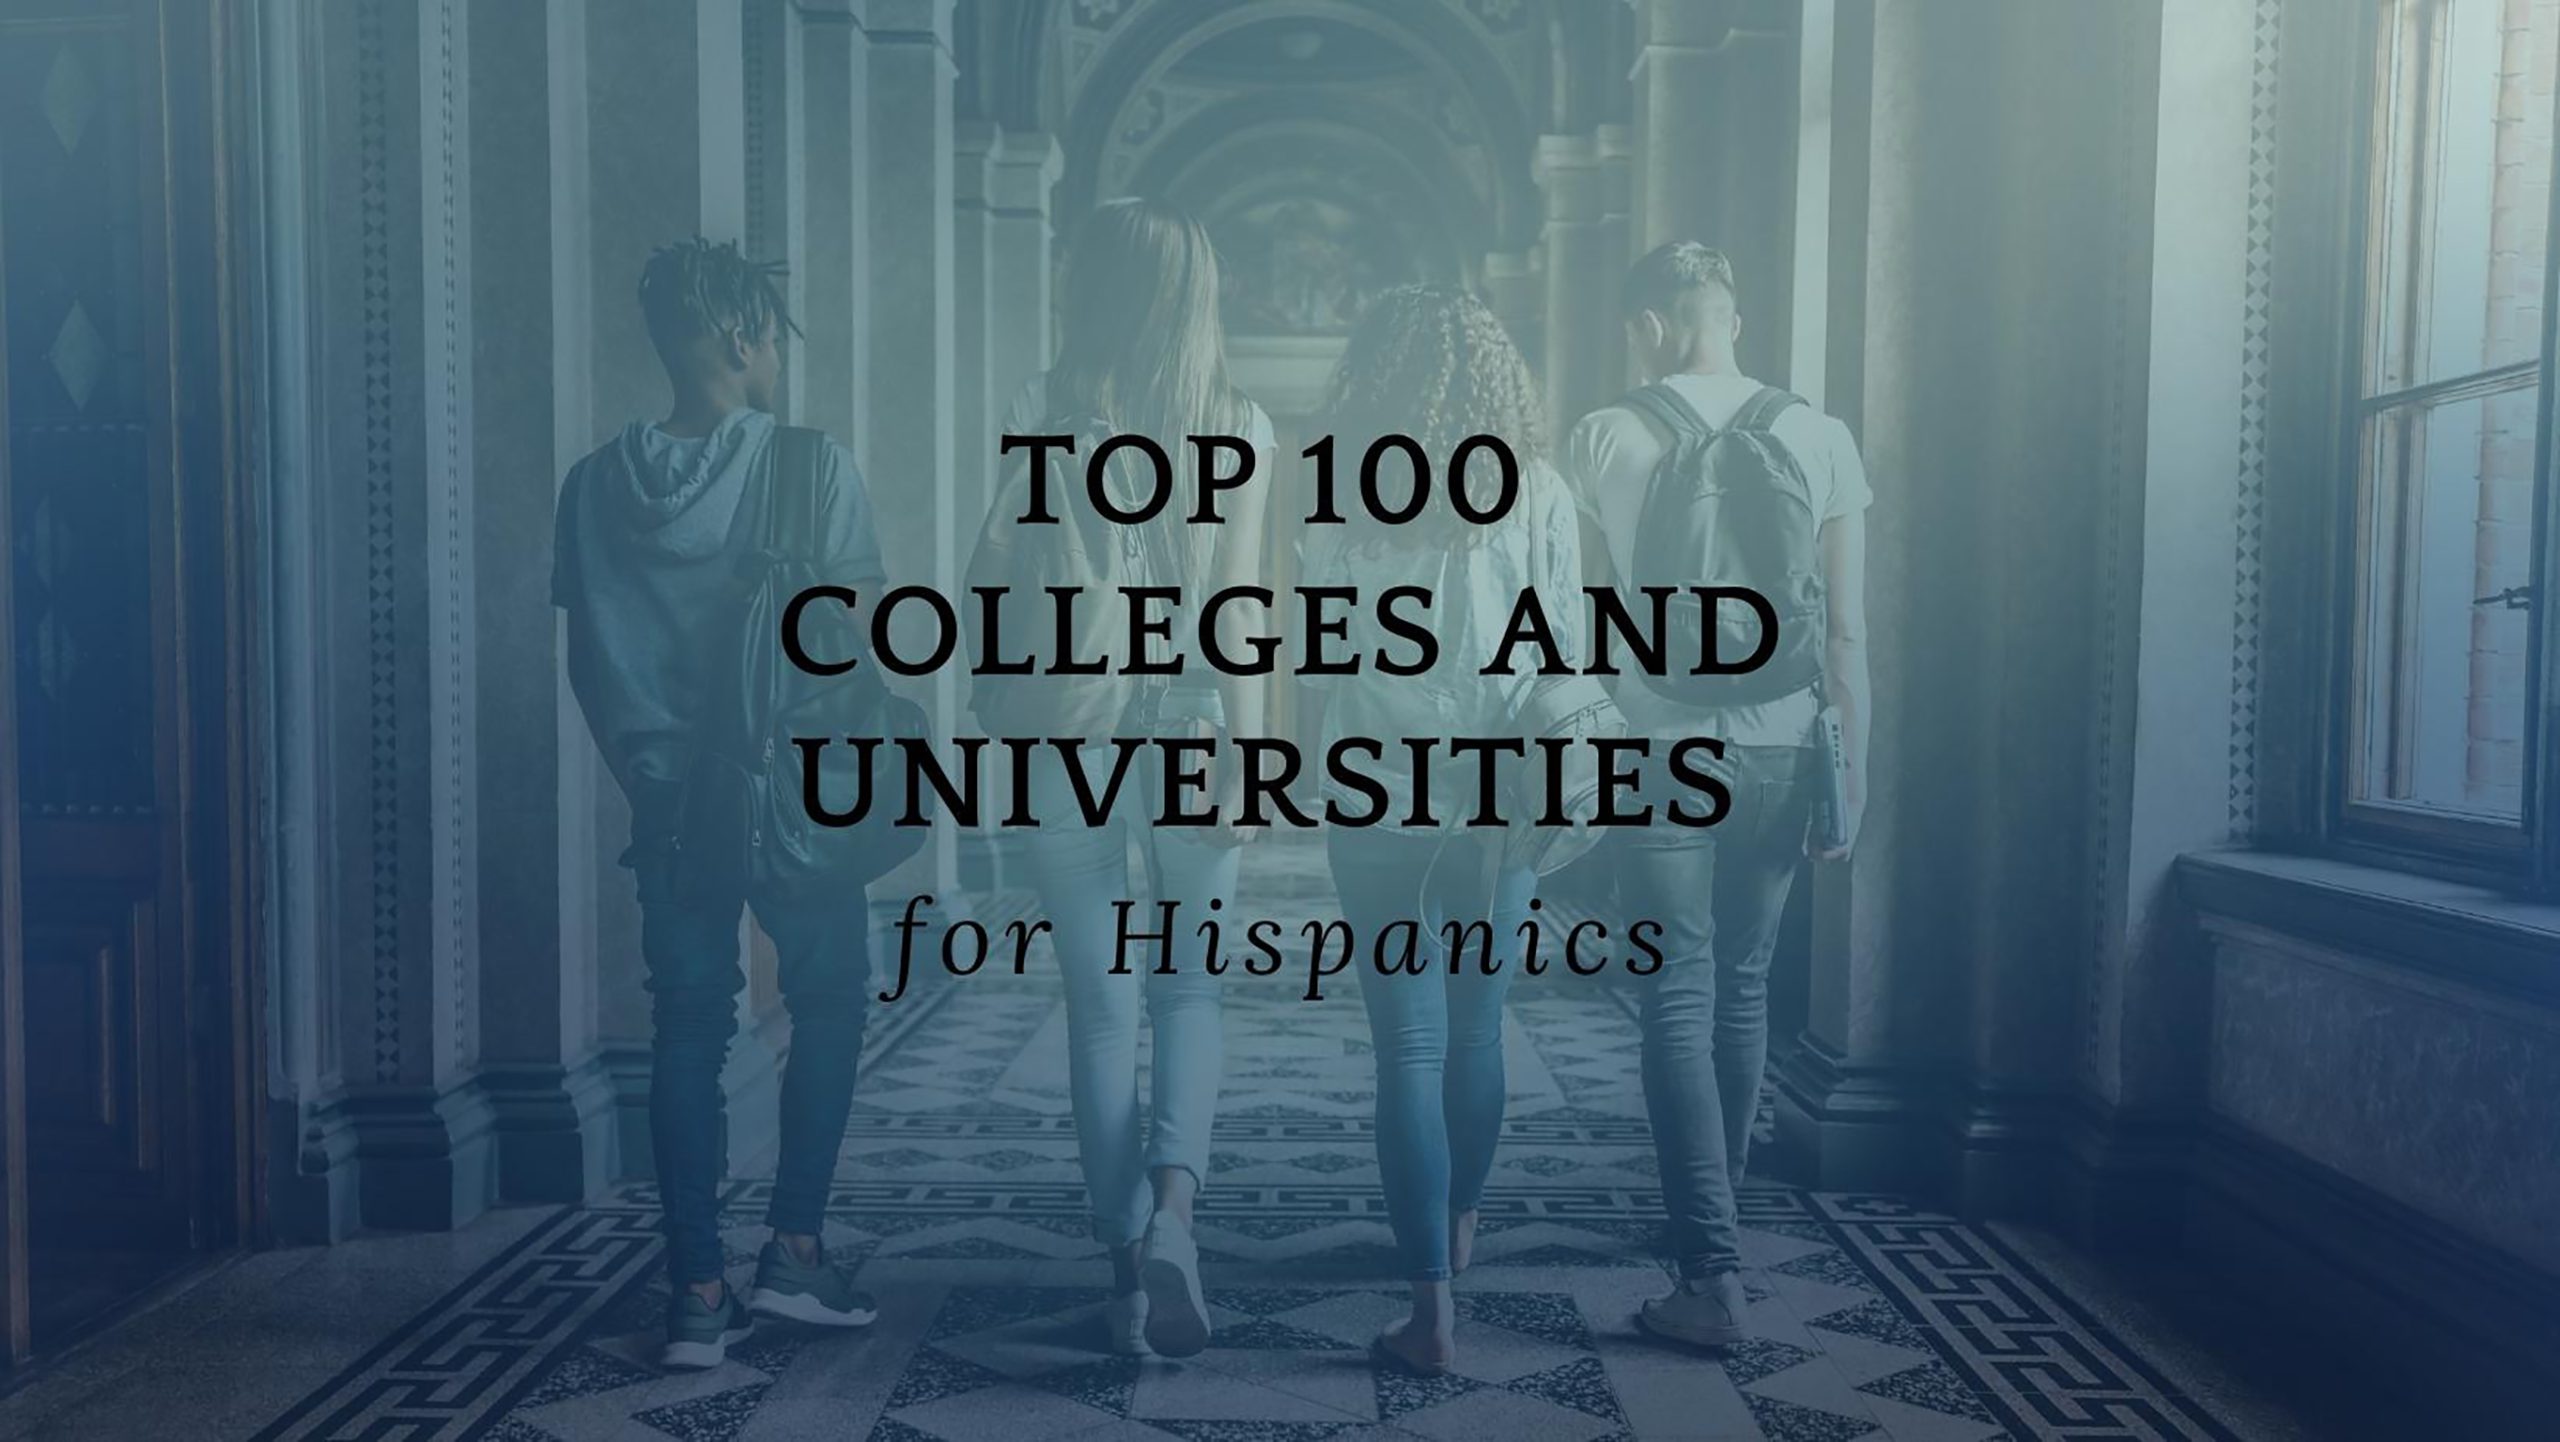 Keiser University Earns Top 100 Ranking from the Hispanic Outlook on Education Magazine